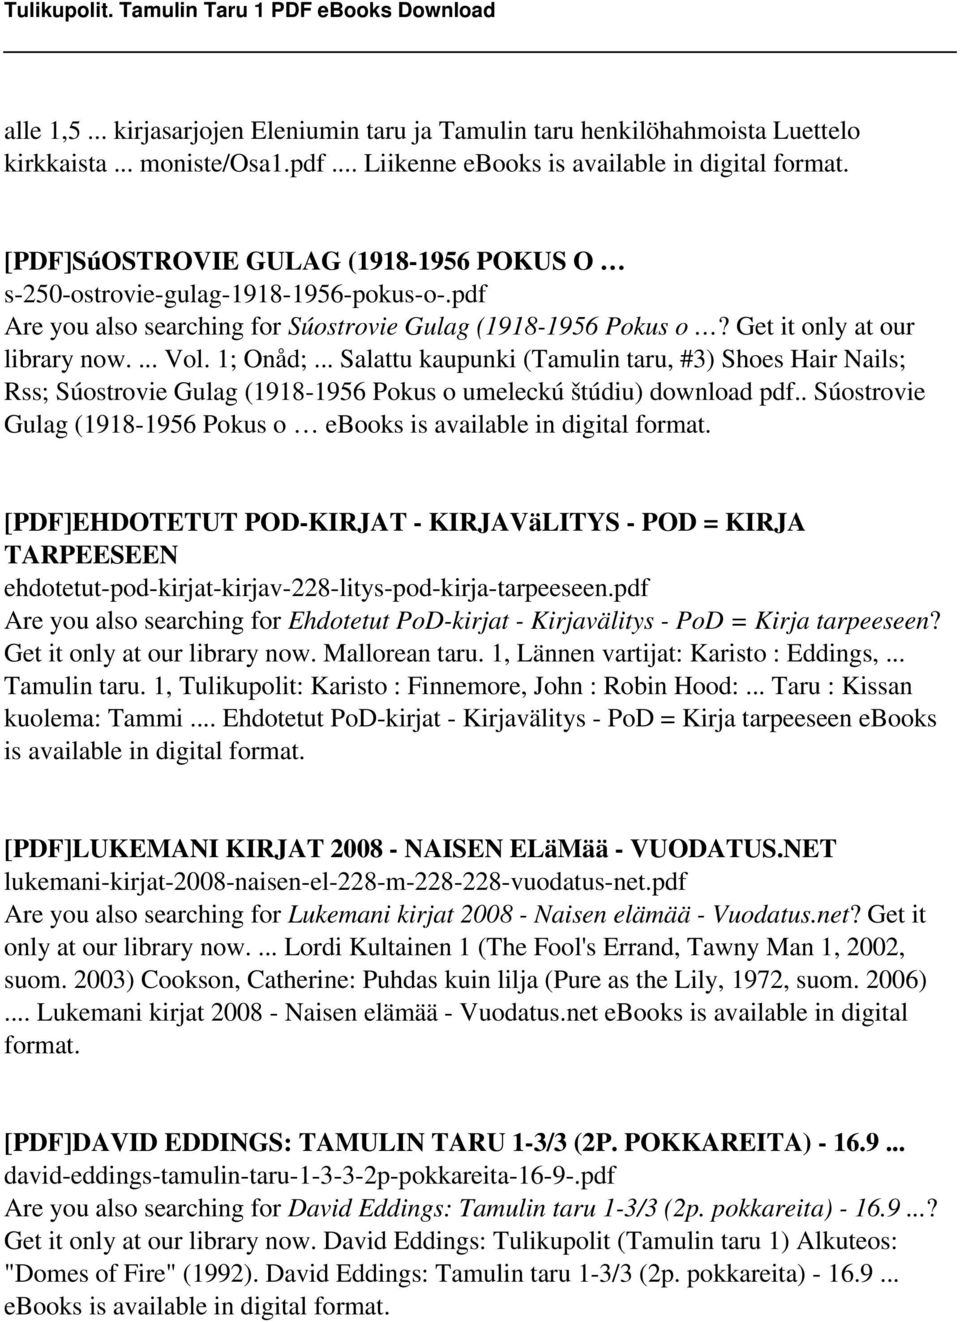 Get it only at our library now.... Vol. 1; Onåd;... Salattu kaupunki (Tamulin taru, #3) Shoes Hair Nails; Rss; Súostrovie Gulag (1918-1956 Pokus o umeleckú štúdiu) download pdf.